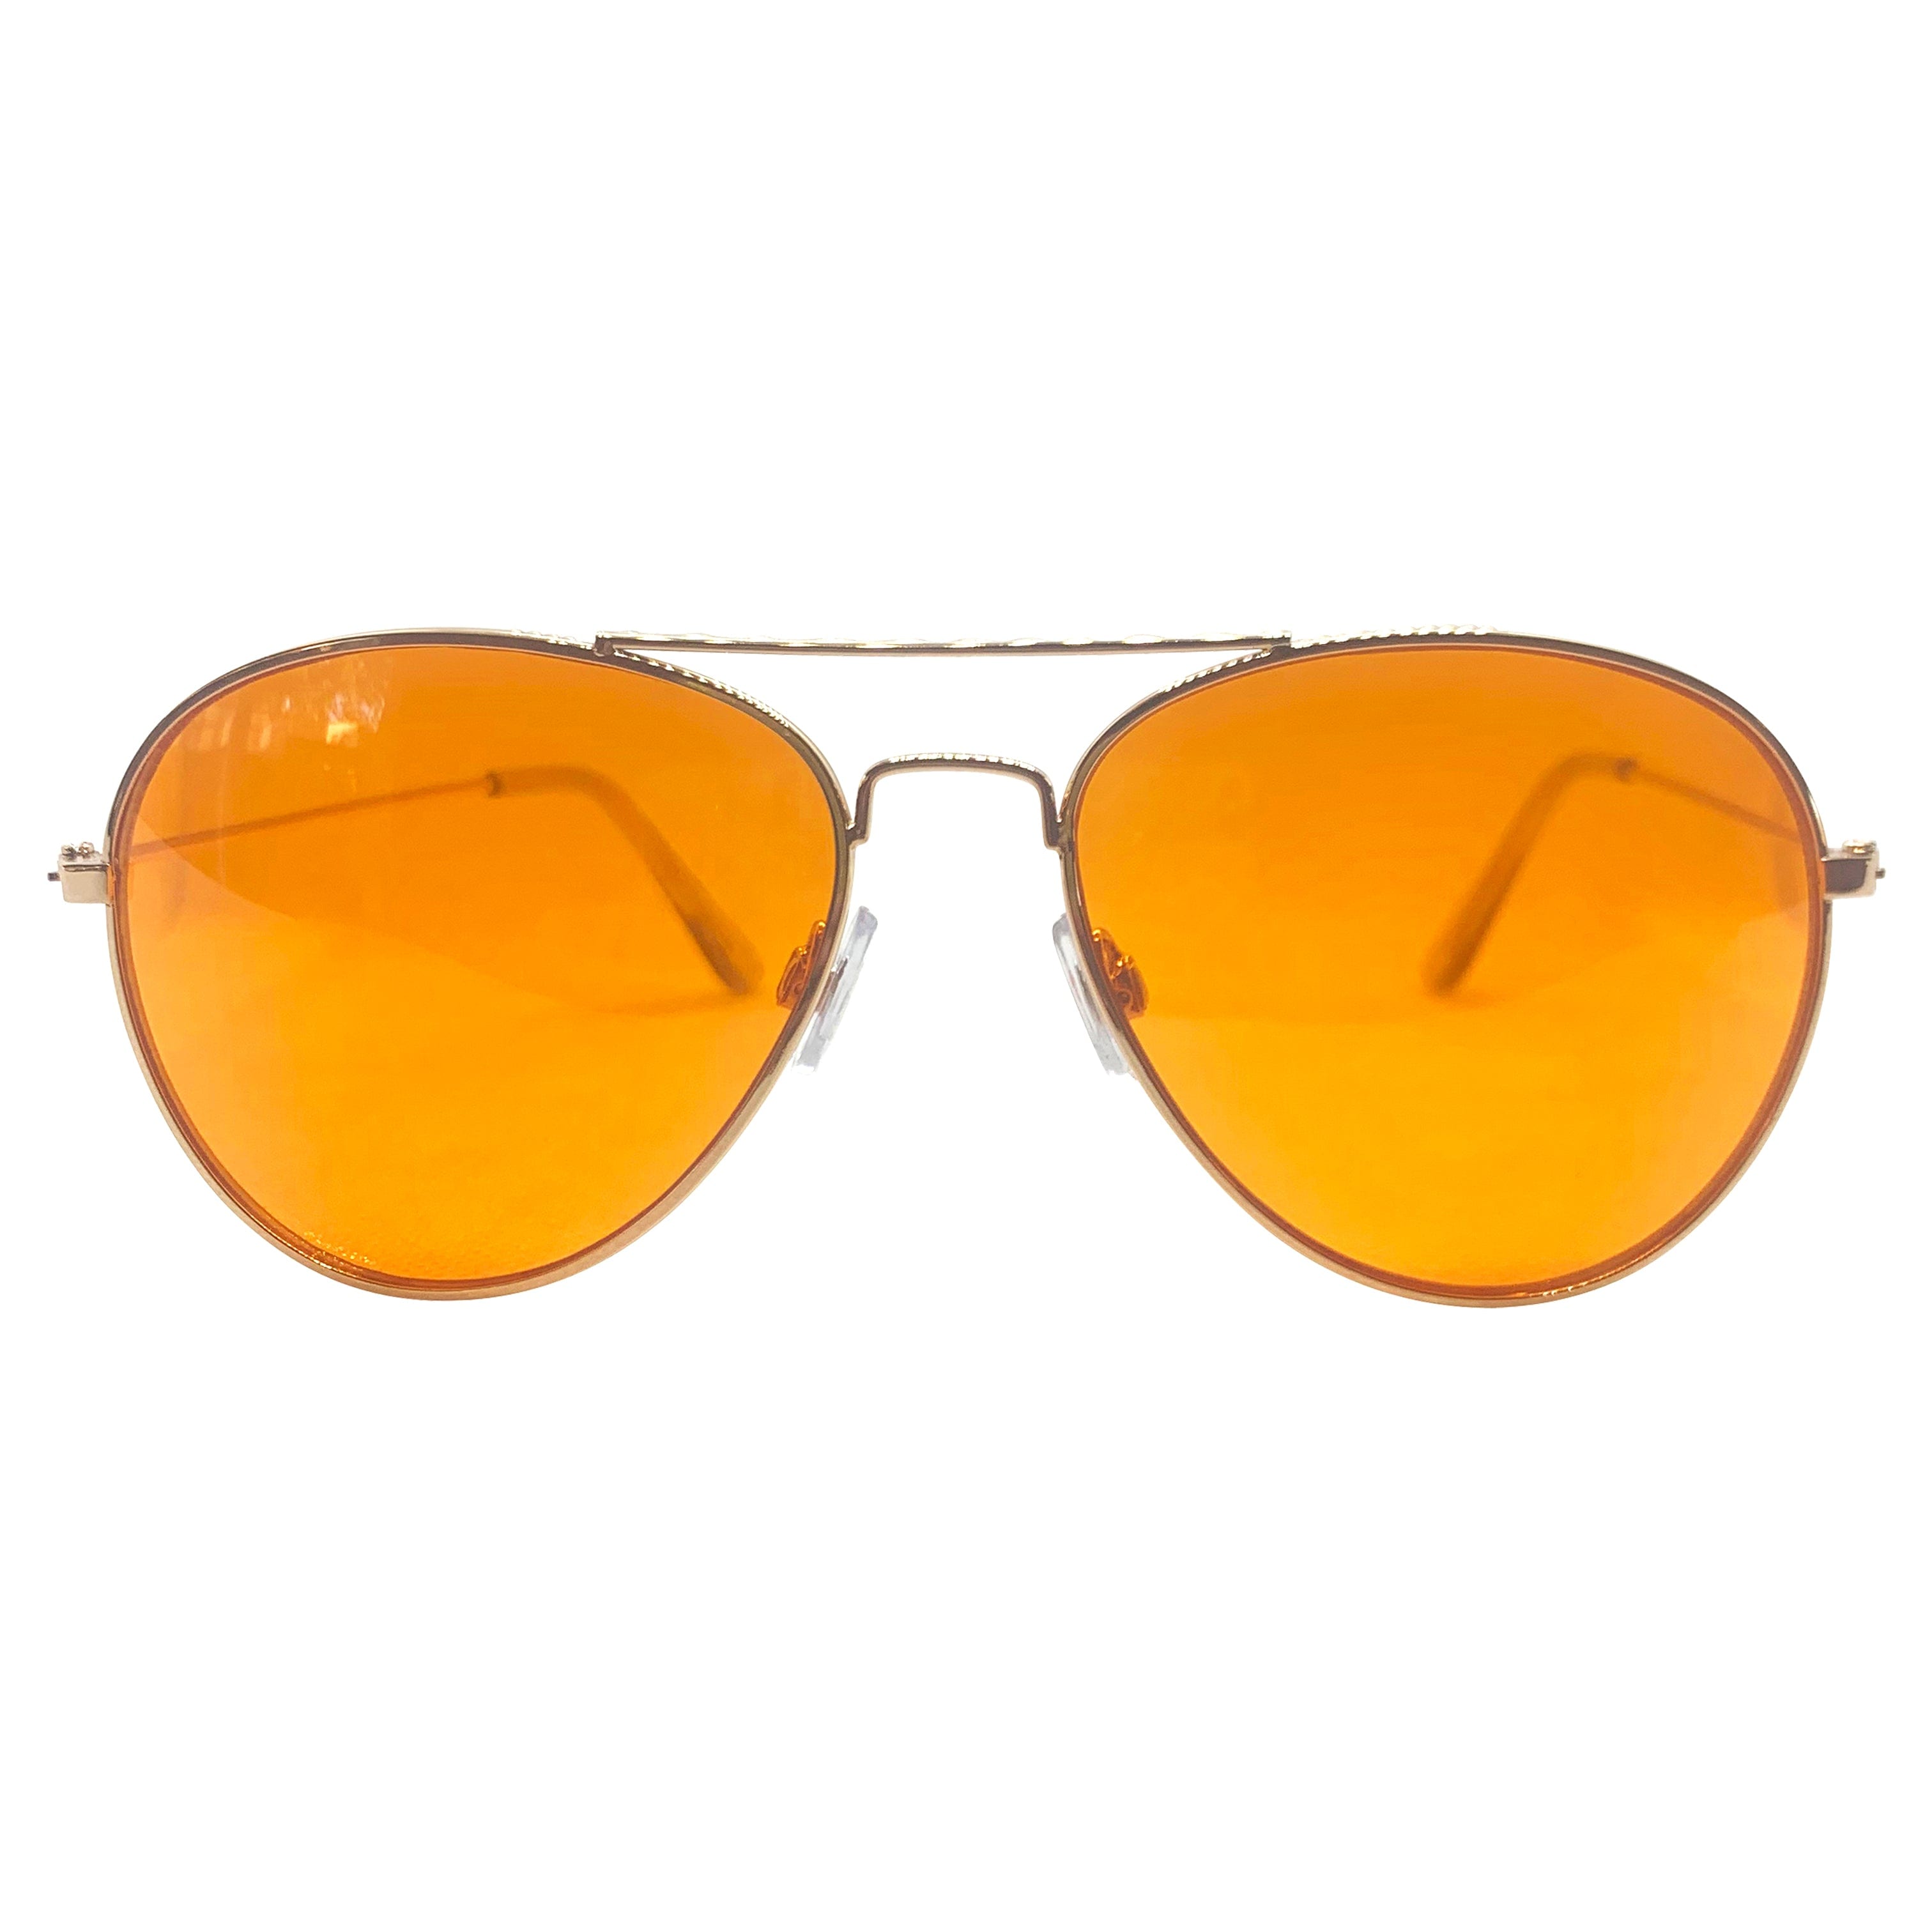 FANTA Gold Aviator Sunglasses